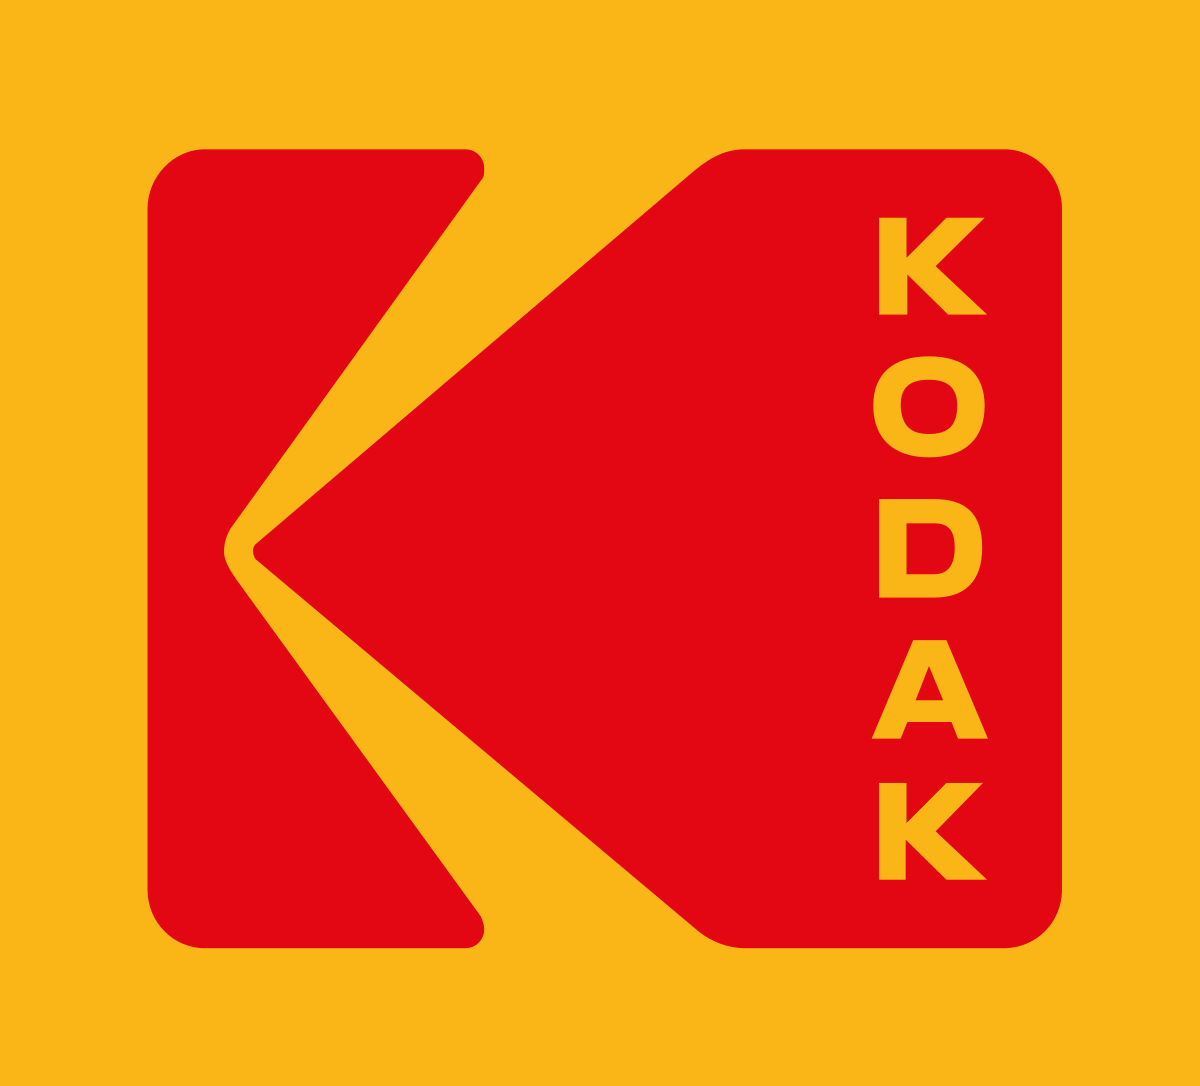 The Eastman Kodak